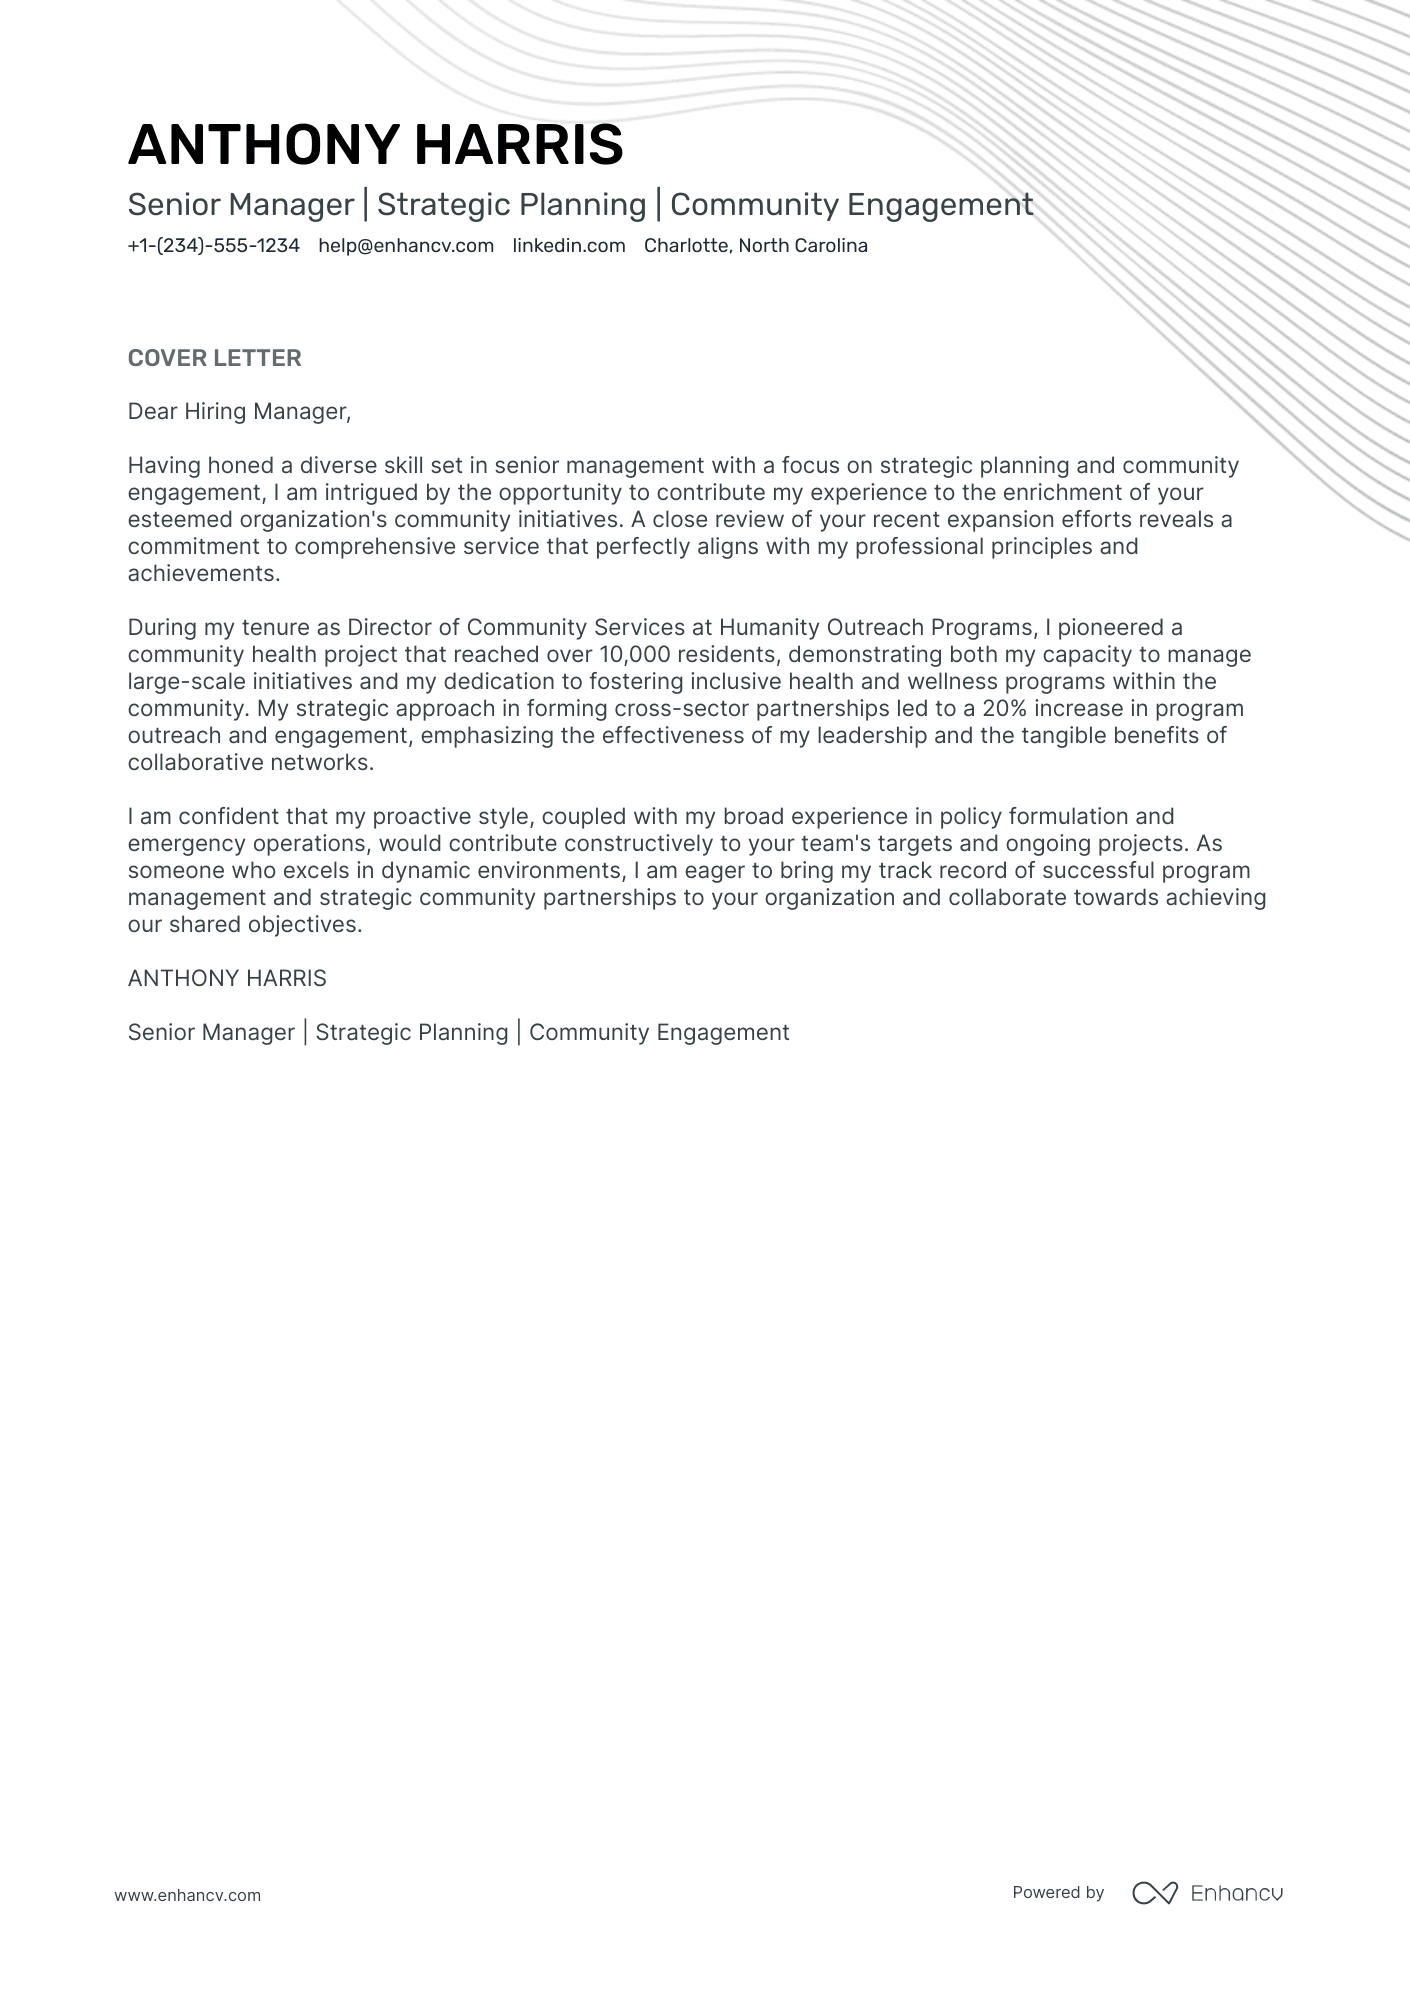 sample cover letter for managing director position